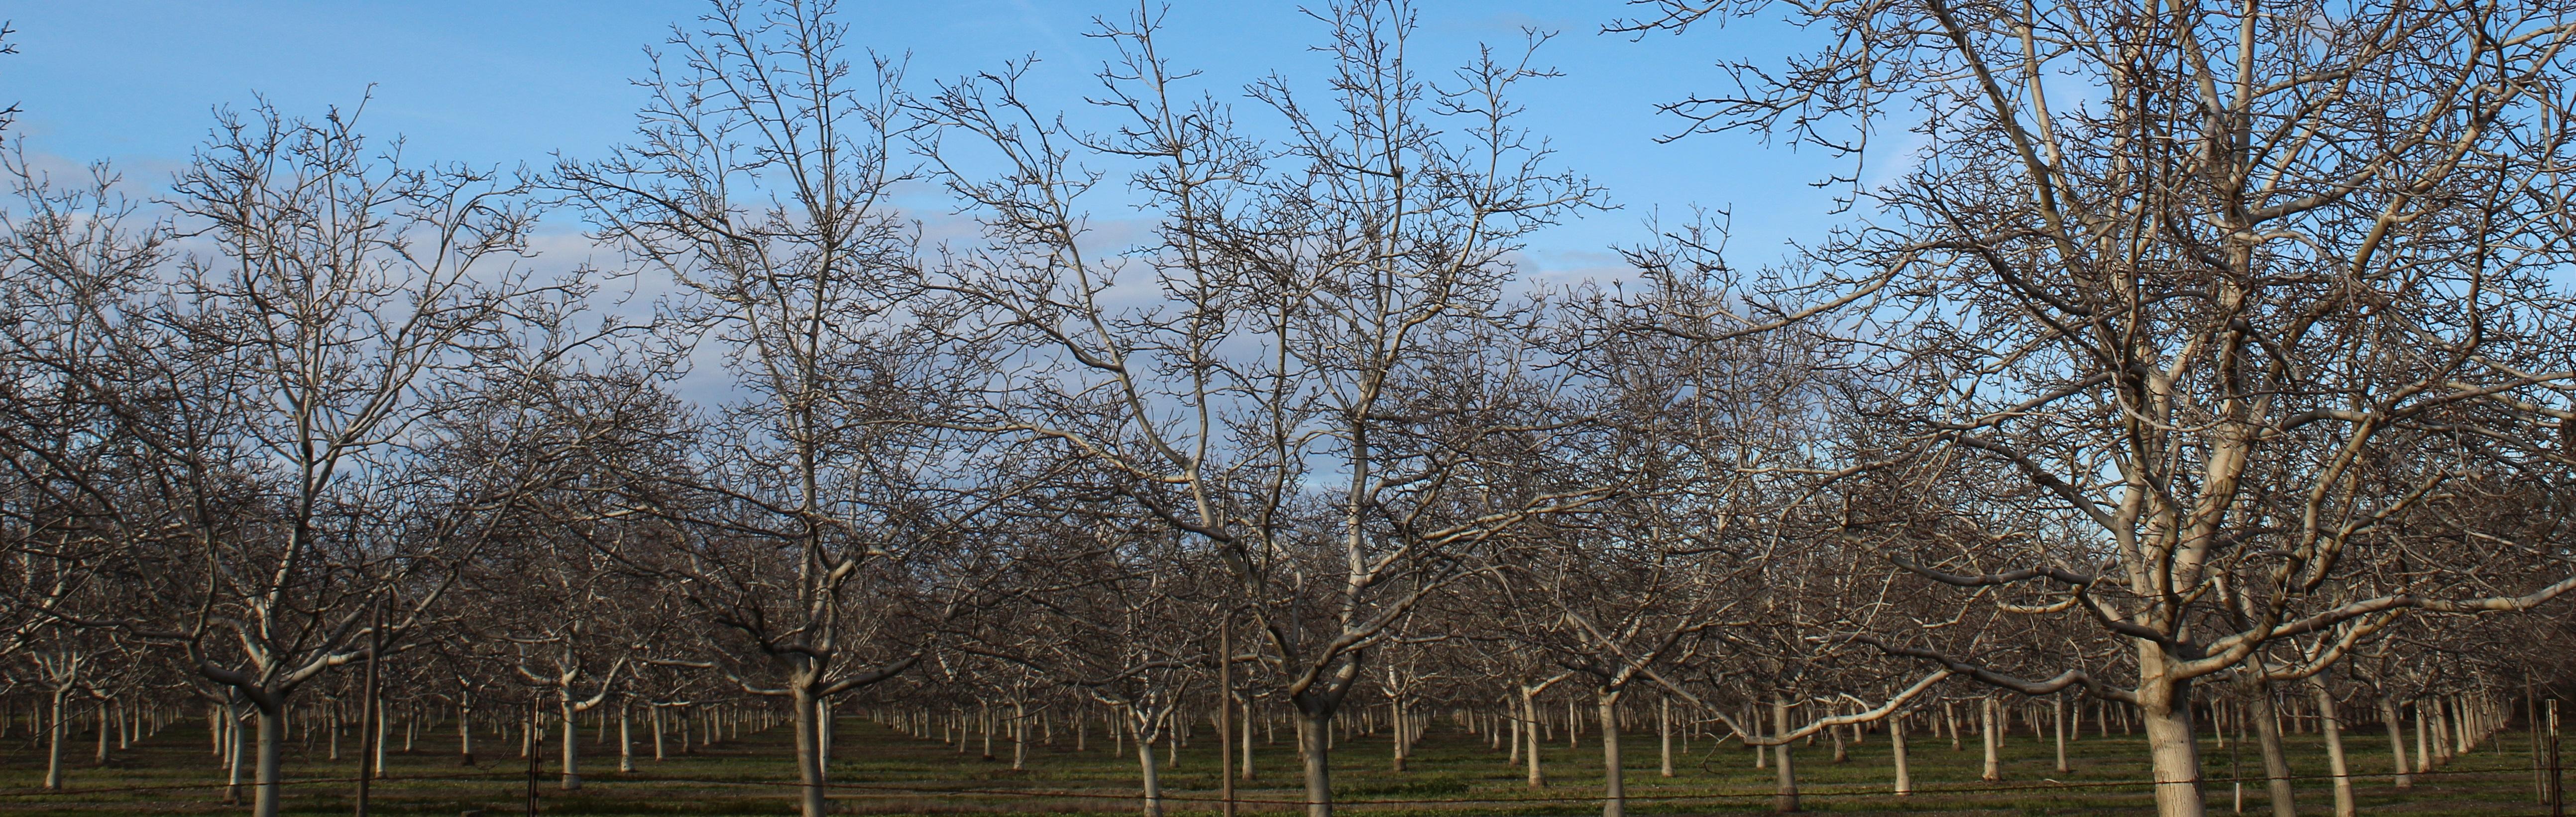 Walnut Tree Crop Image